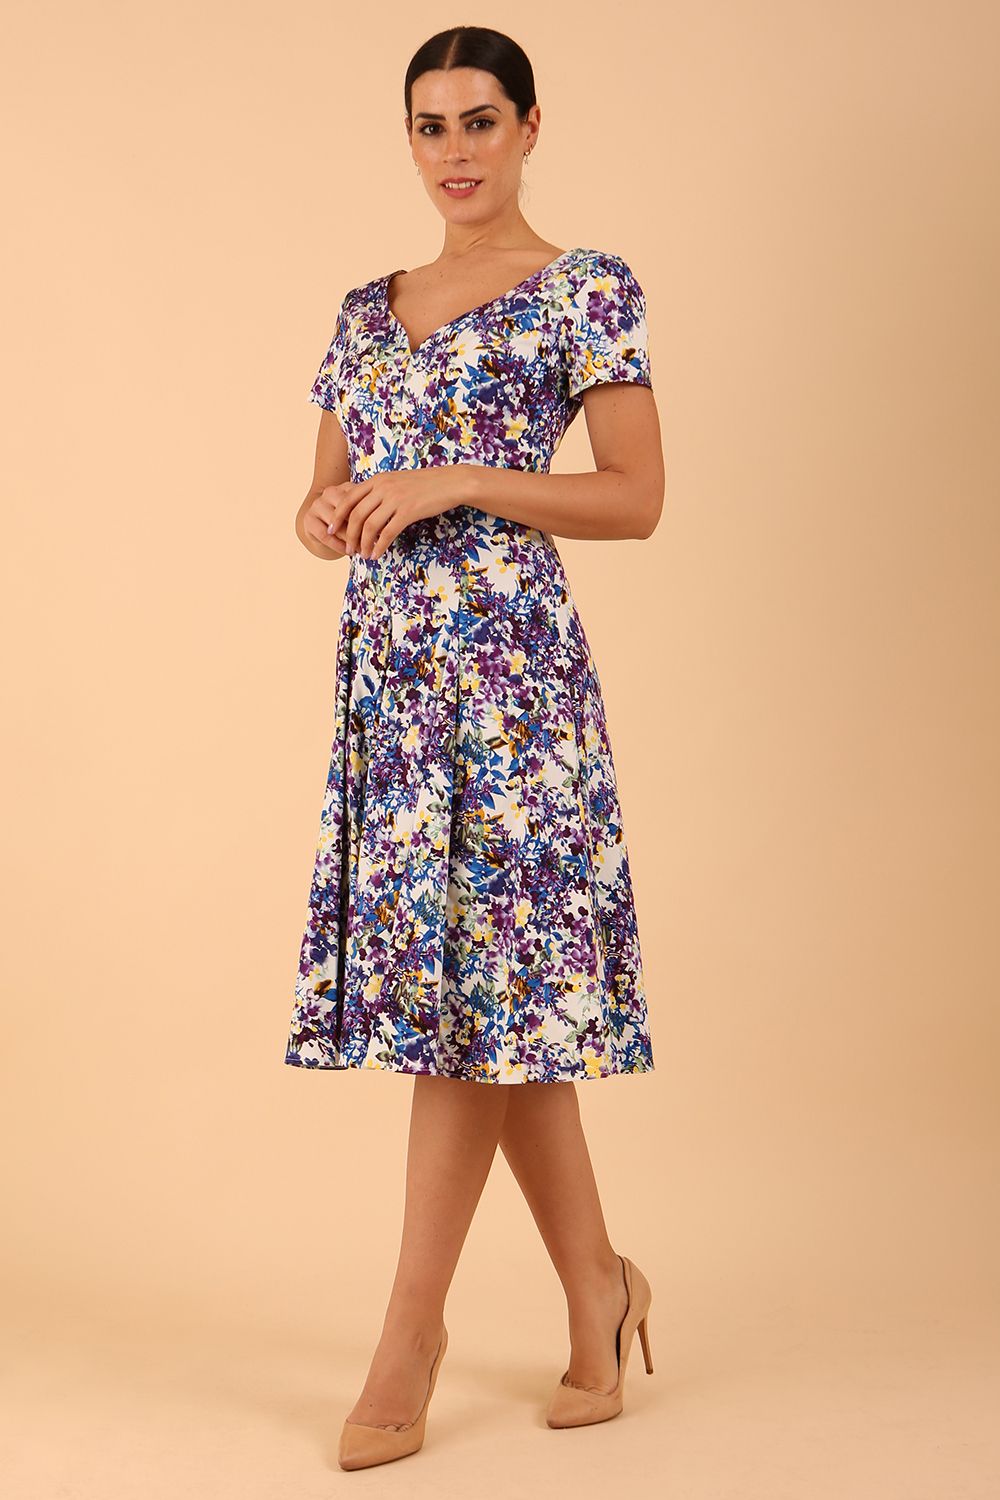 Model wearing a diva catwalk Iris Print Dress short sleeve swing skirt in Kew print front